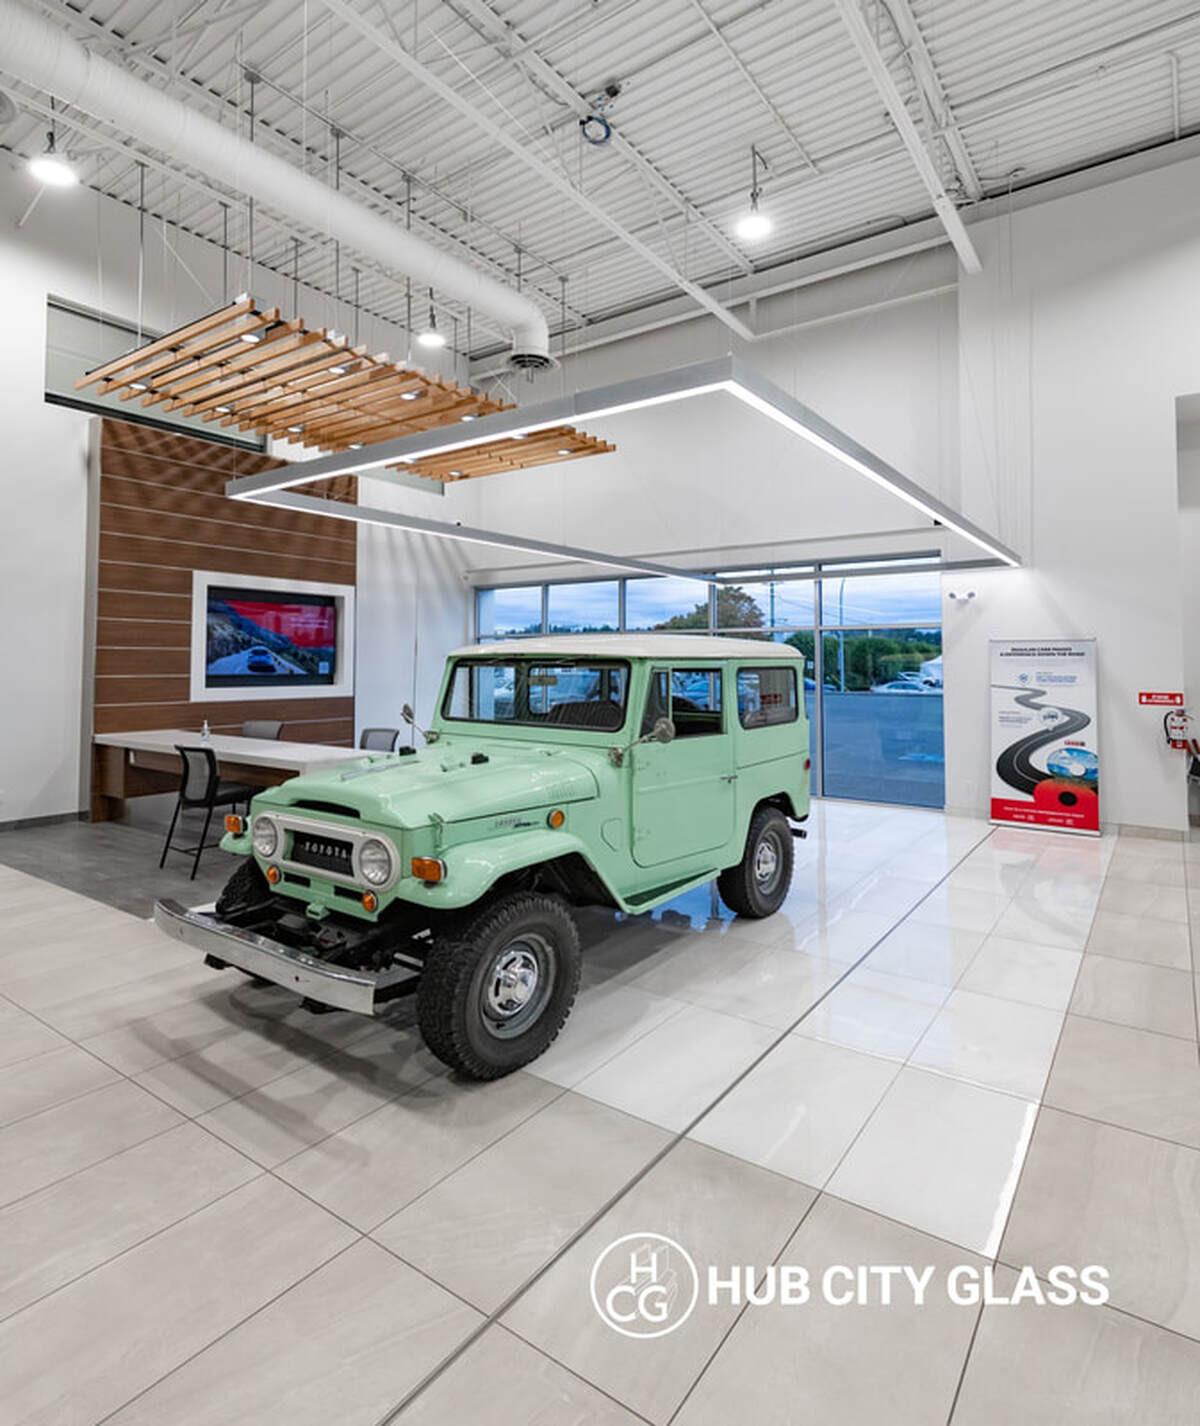 nanaimo glass commercial hub city installation design car dealership